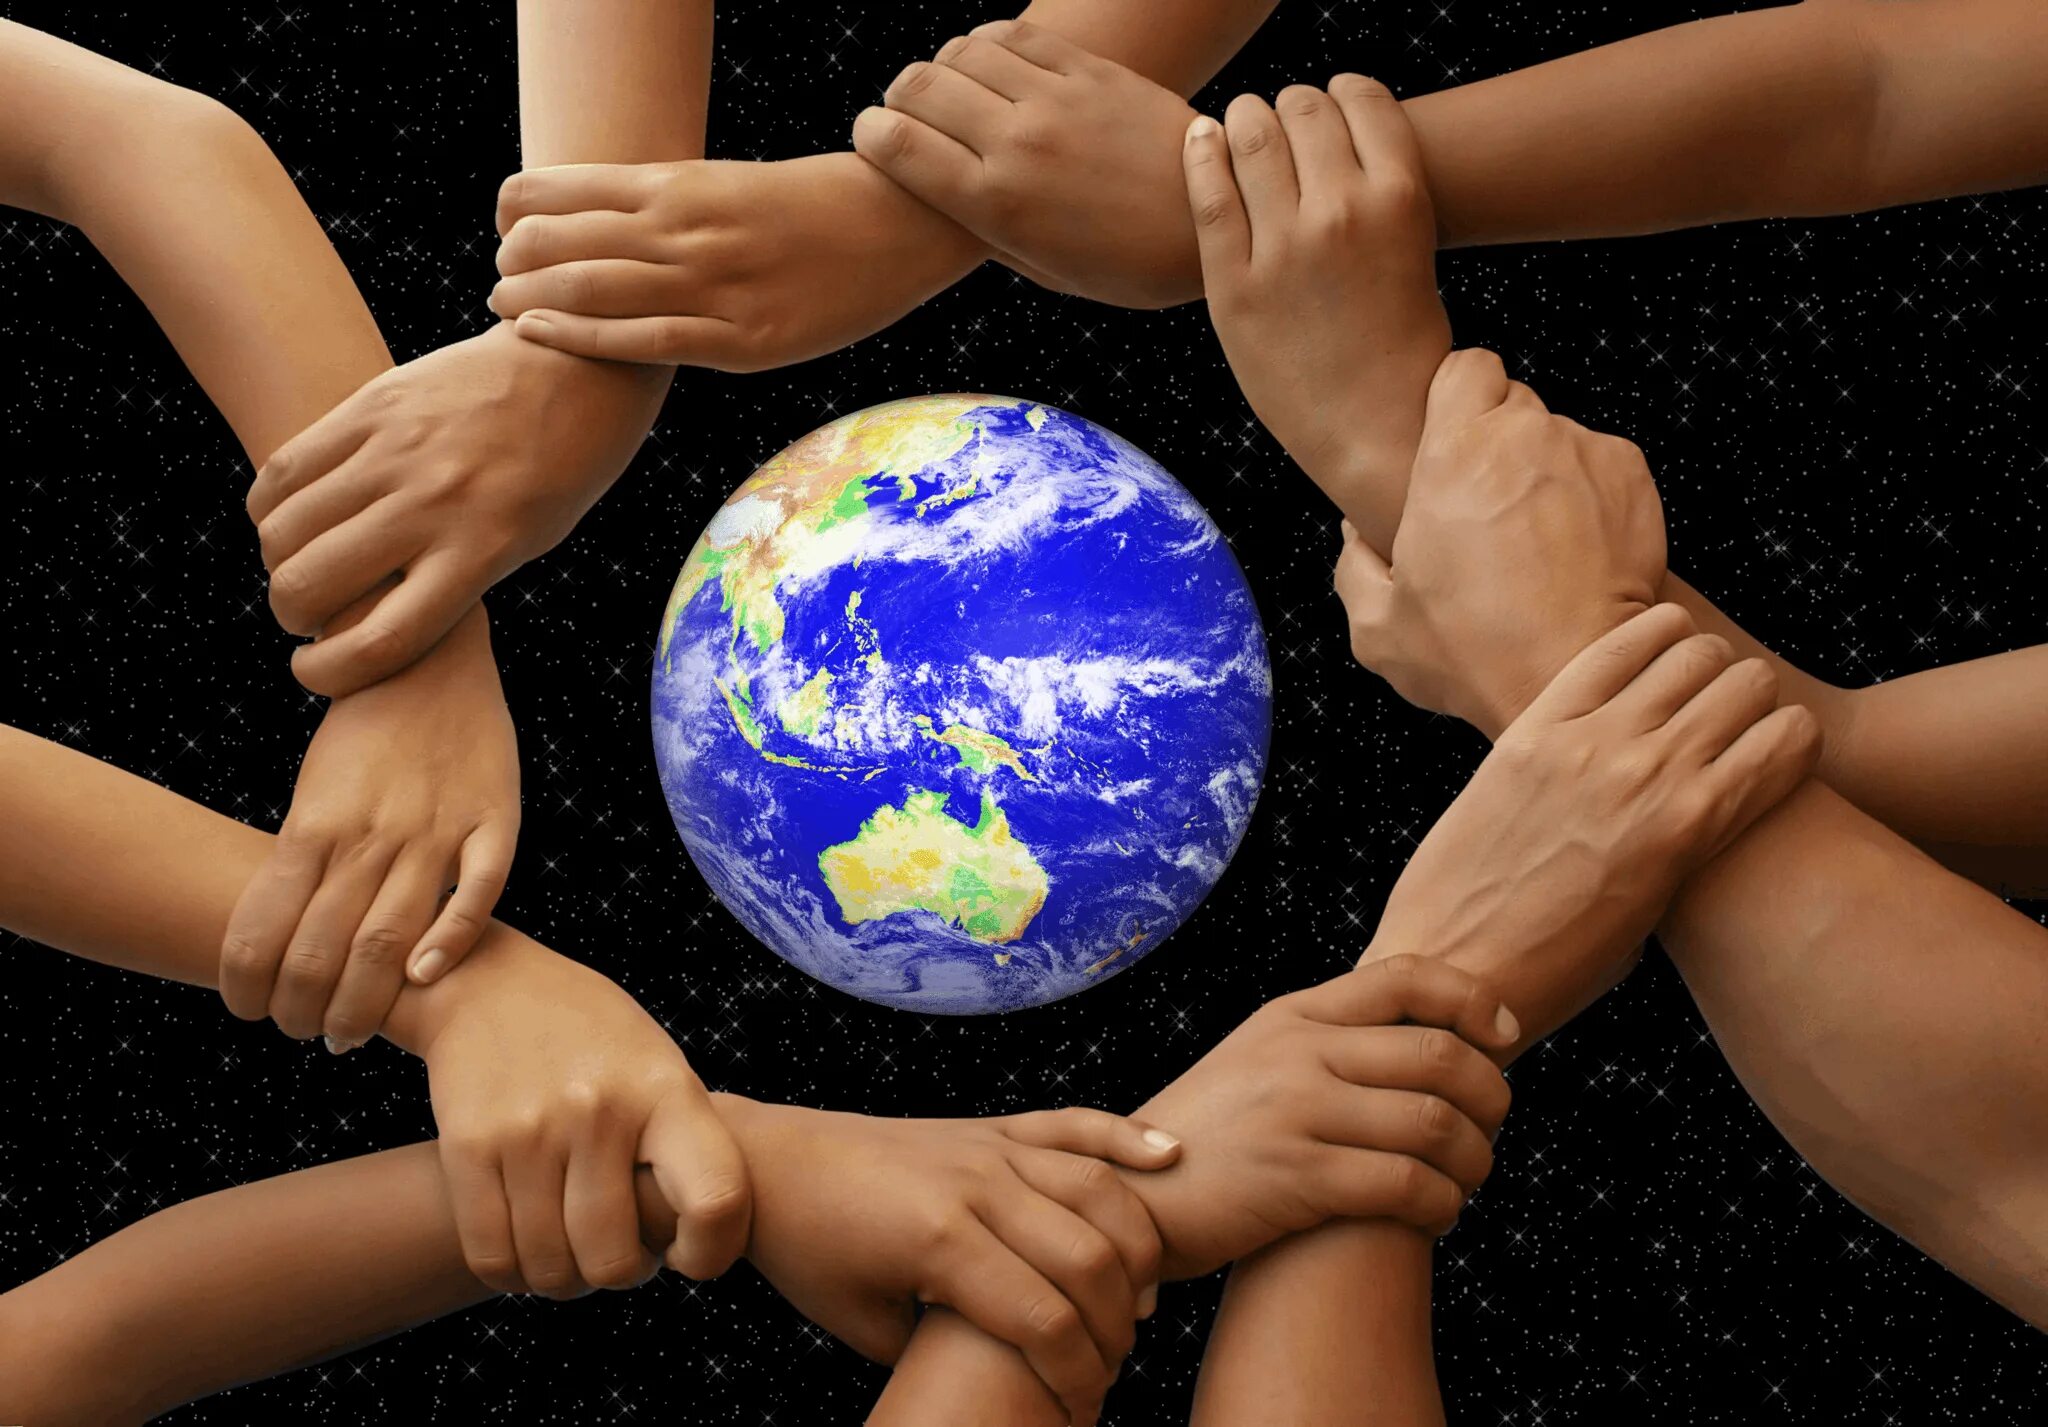 Дни нашей жизни страна. "И на земли мир…". Мир на планете. Дружат люди всей земли. Планета людей.